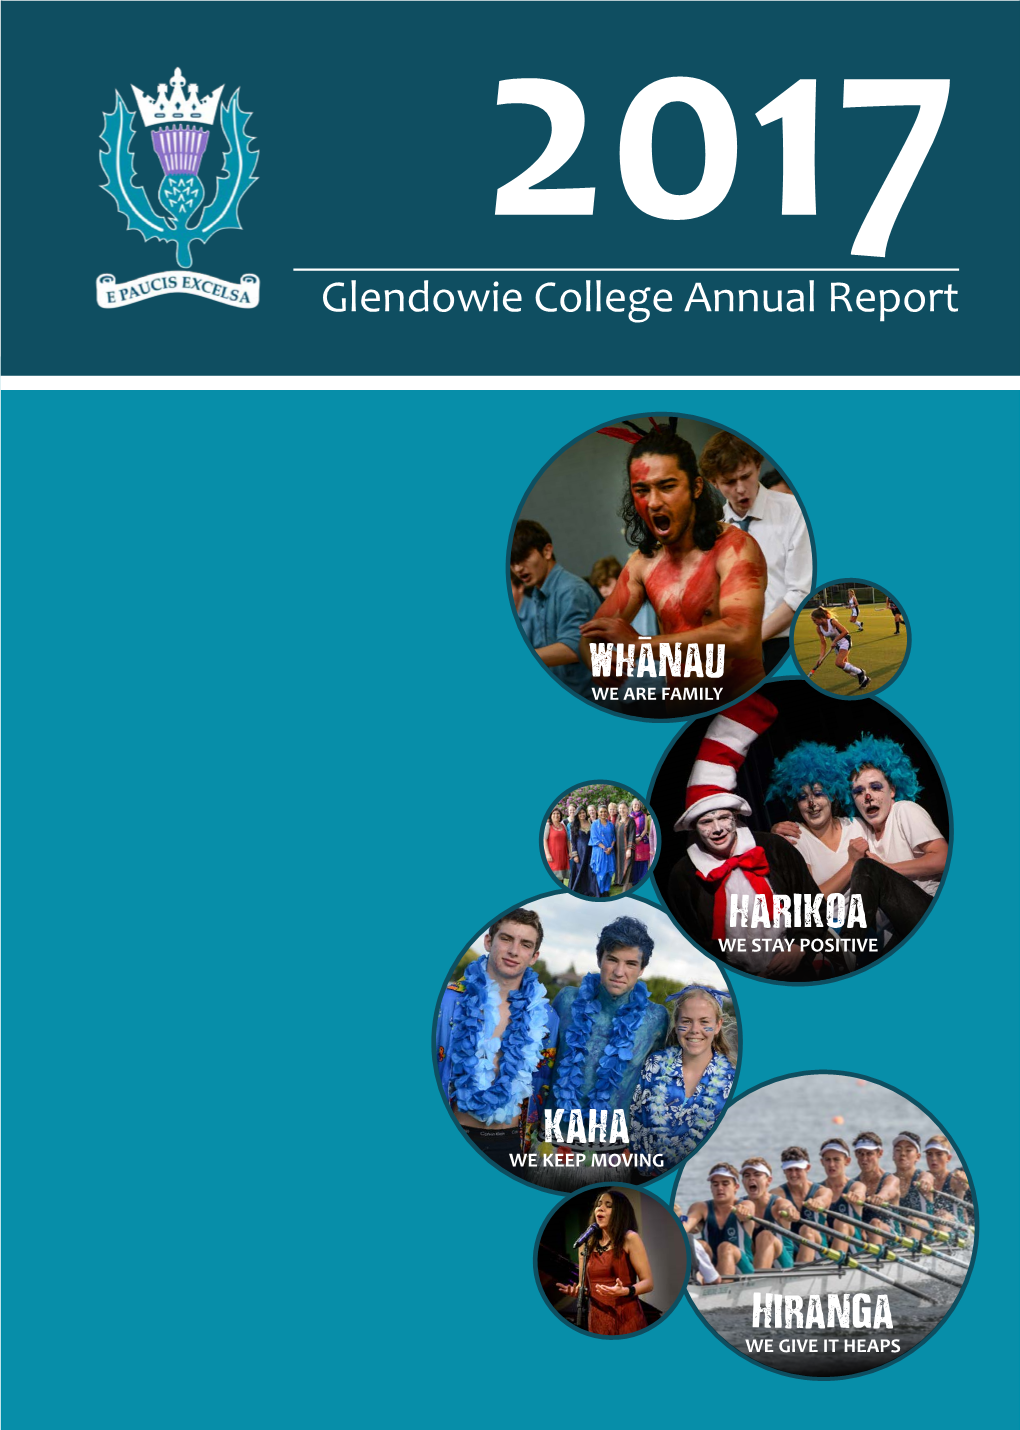 Glendowie College Annual Report